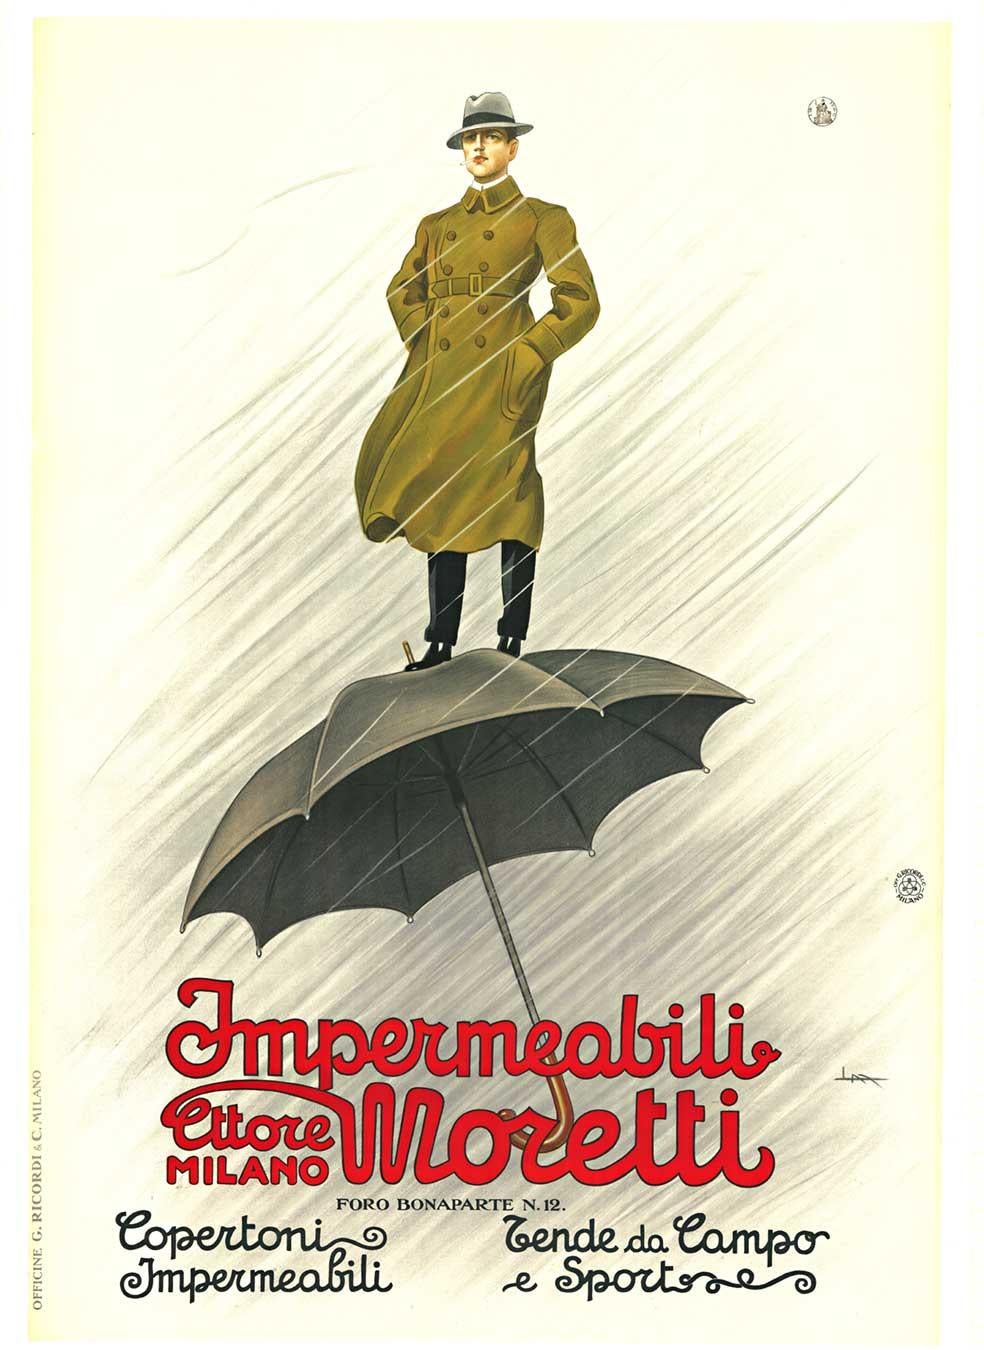 Original Impermeaili Moretti Italian art deco vintage poster